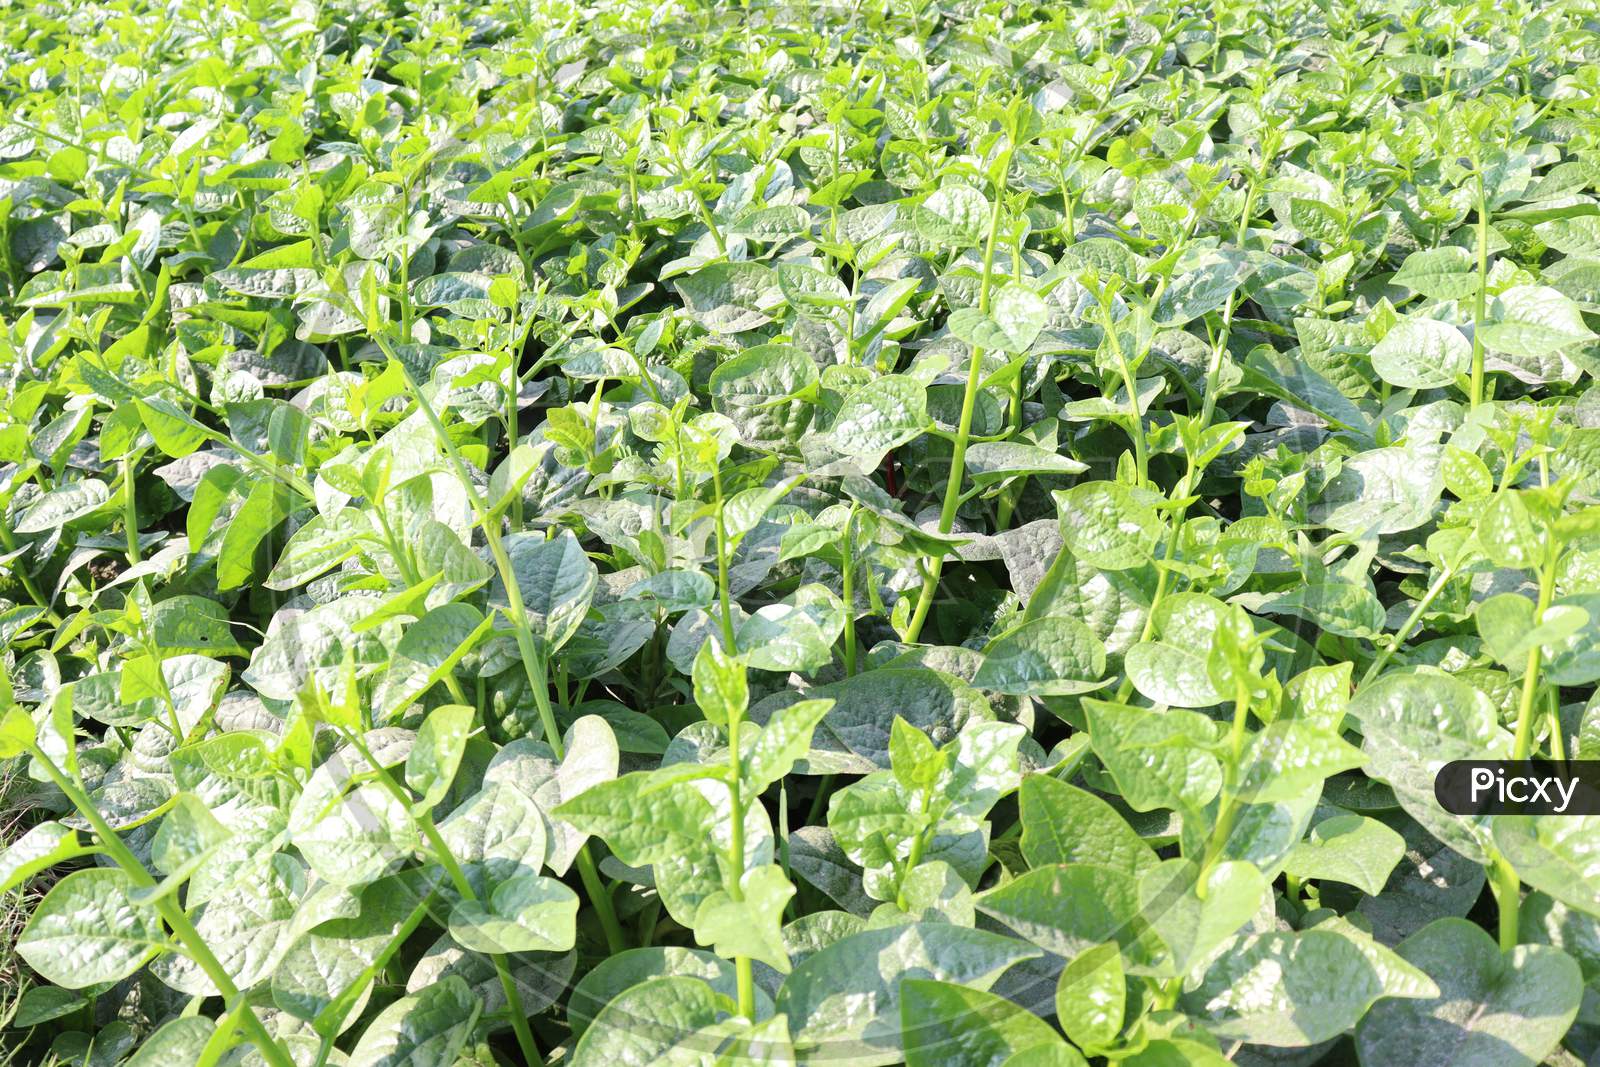 Green Colored Malabar Spinach Farm On Field